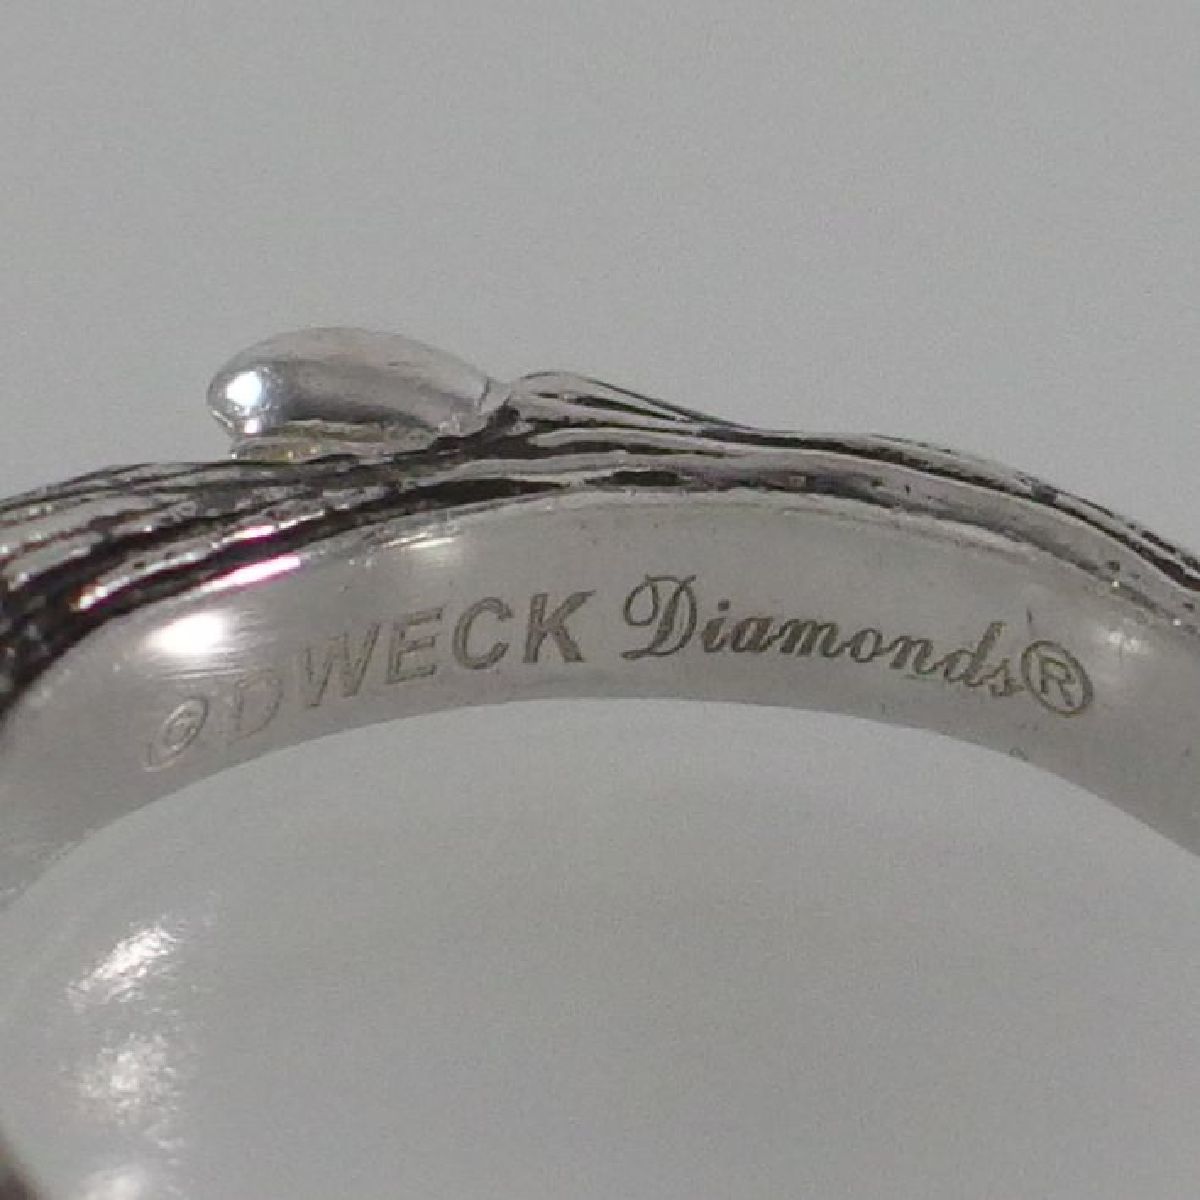 A9225◆【STEPHEN DWECK Diamonds】◆ 枝デザイン ダイヤモンド & 925 スターリングシルバー ◆ リング * 指輪 ◆ サイズ約13号 _画像5